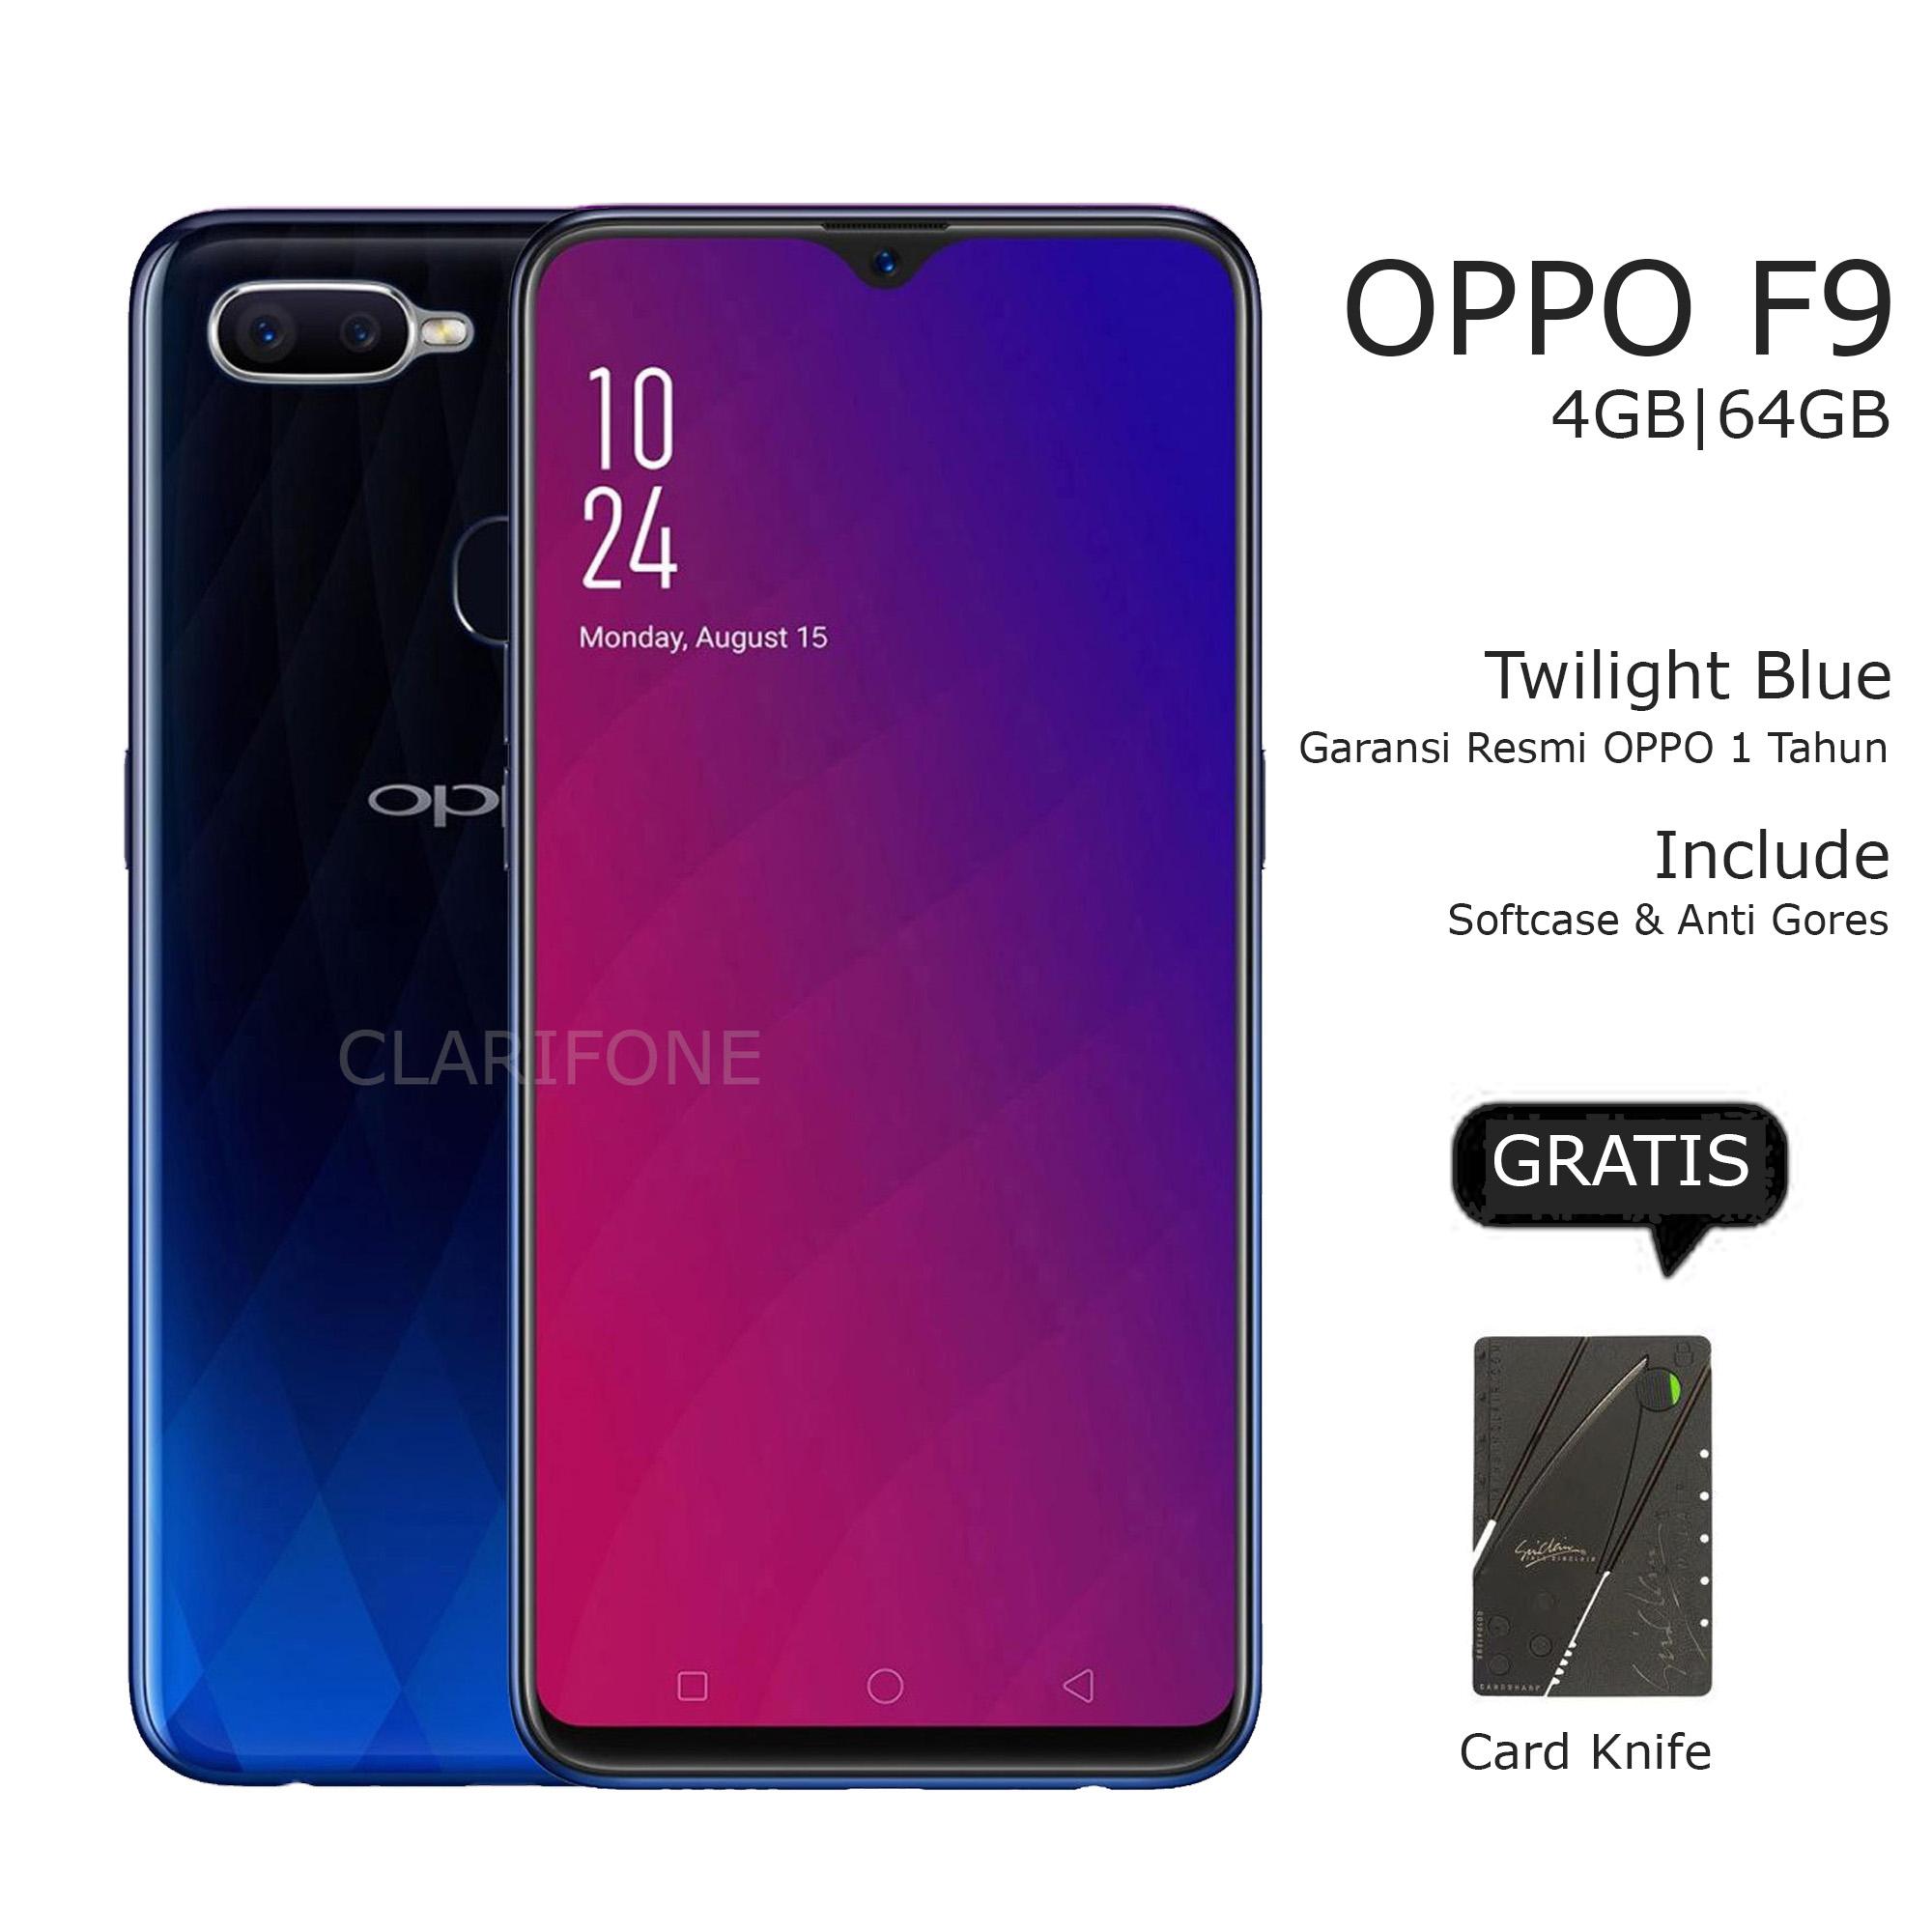 OPPO F9 4GB/64GB - LTE - TWILIGHT BLUE